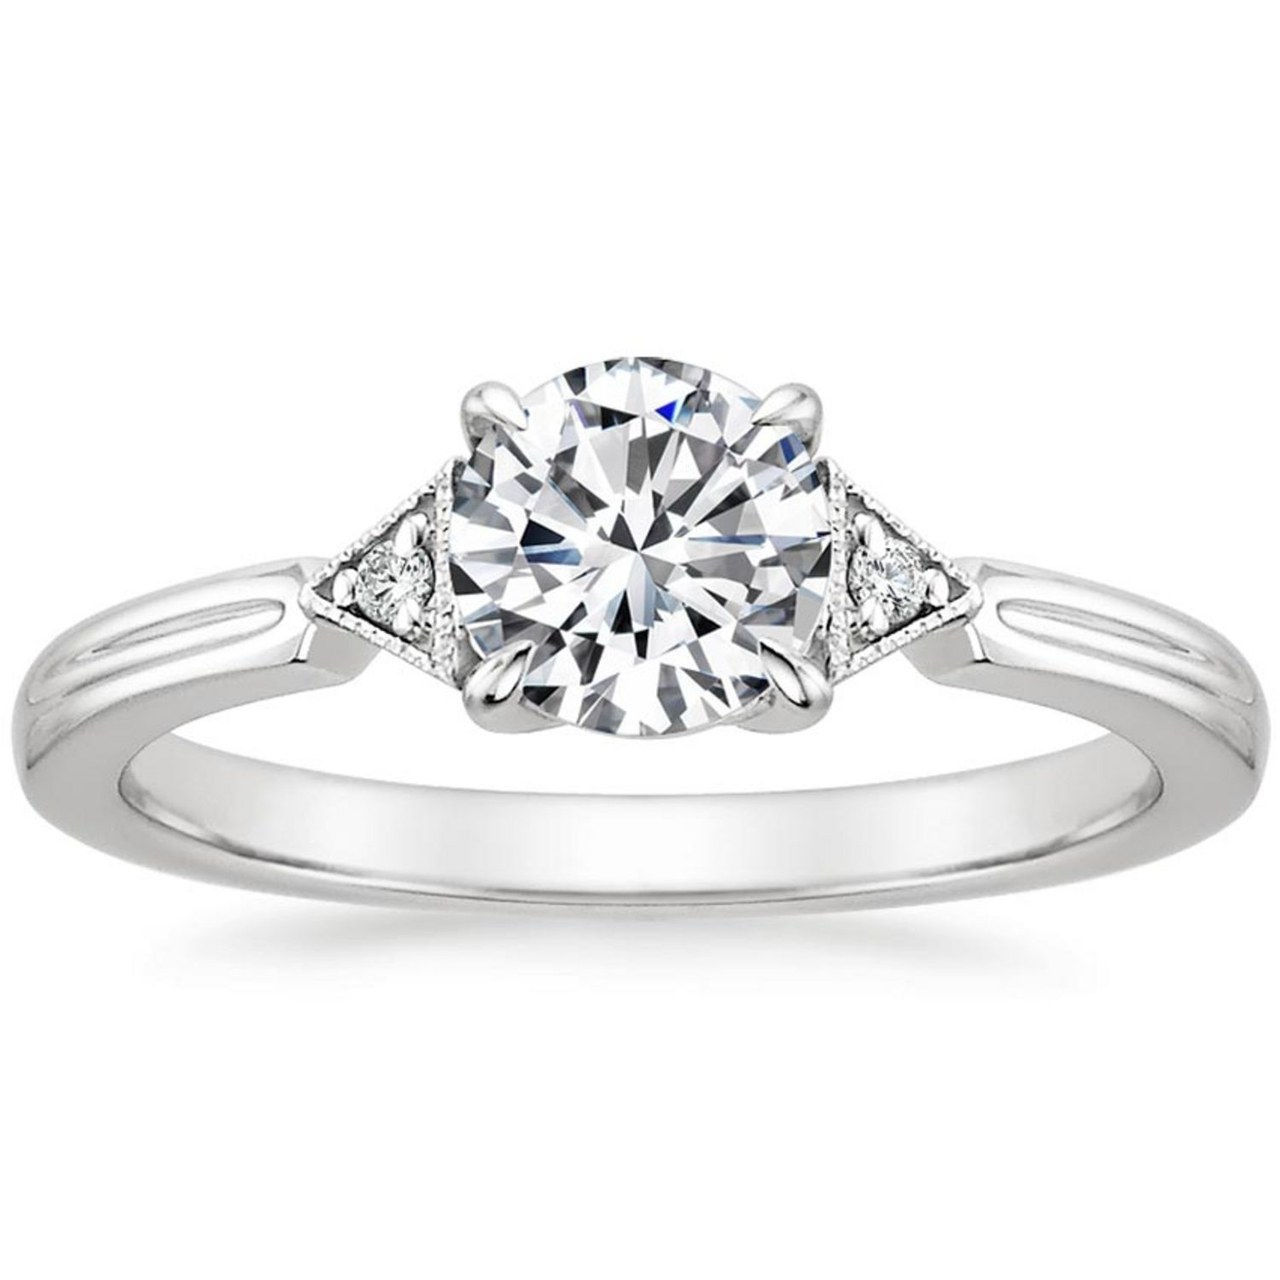 4 diamond engagement rings 0811